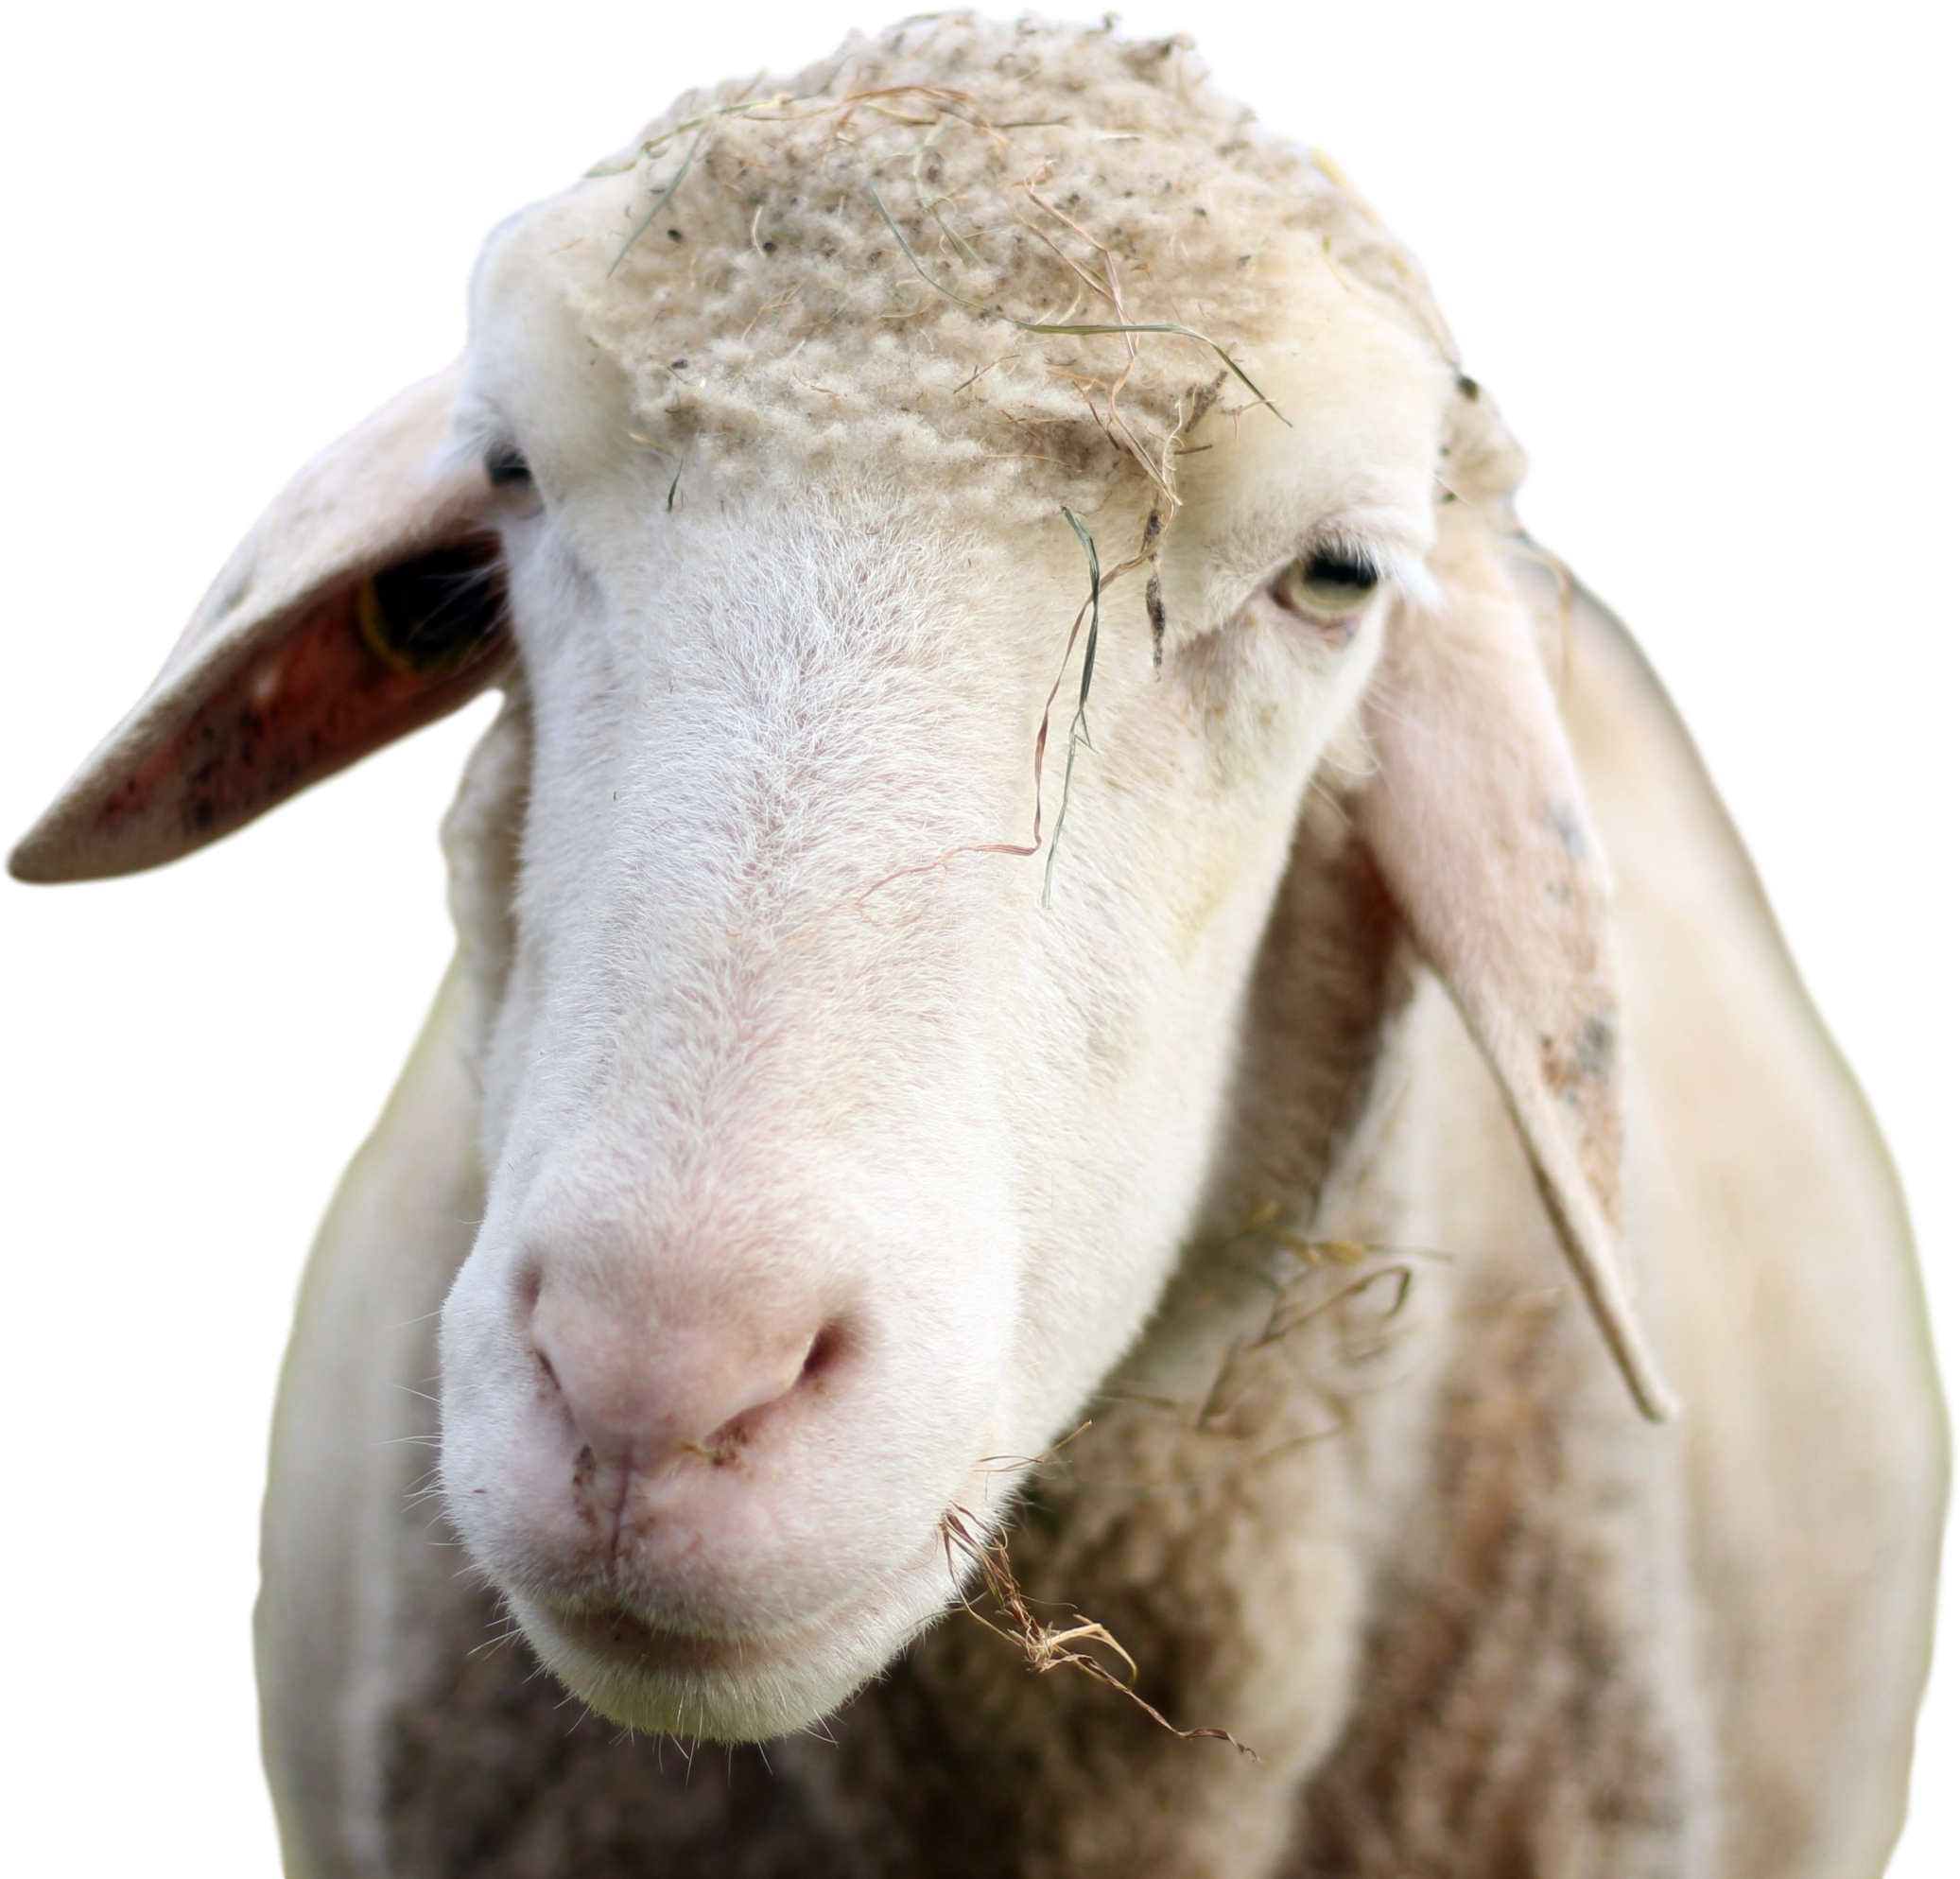 A Close Up Of A Sheep